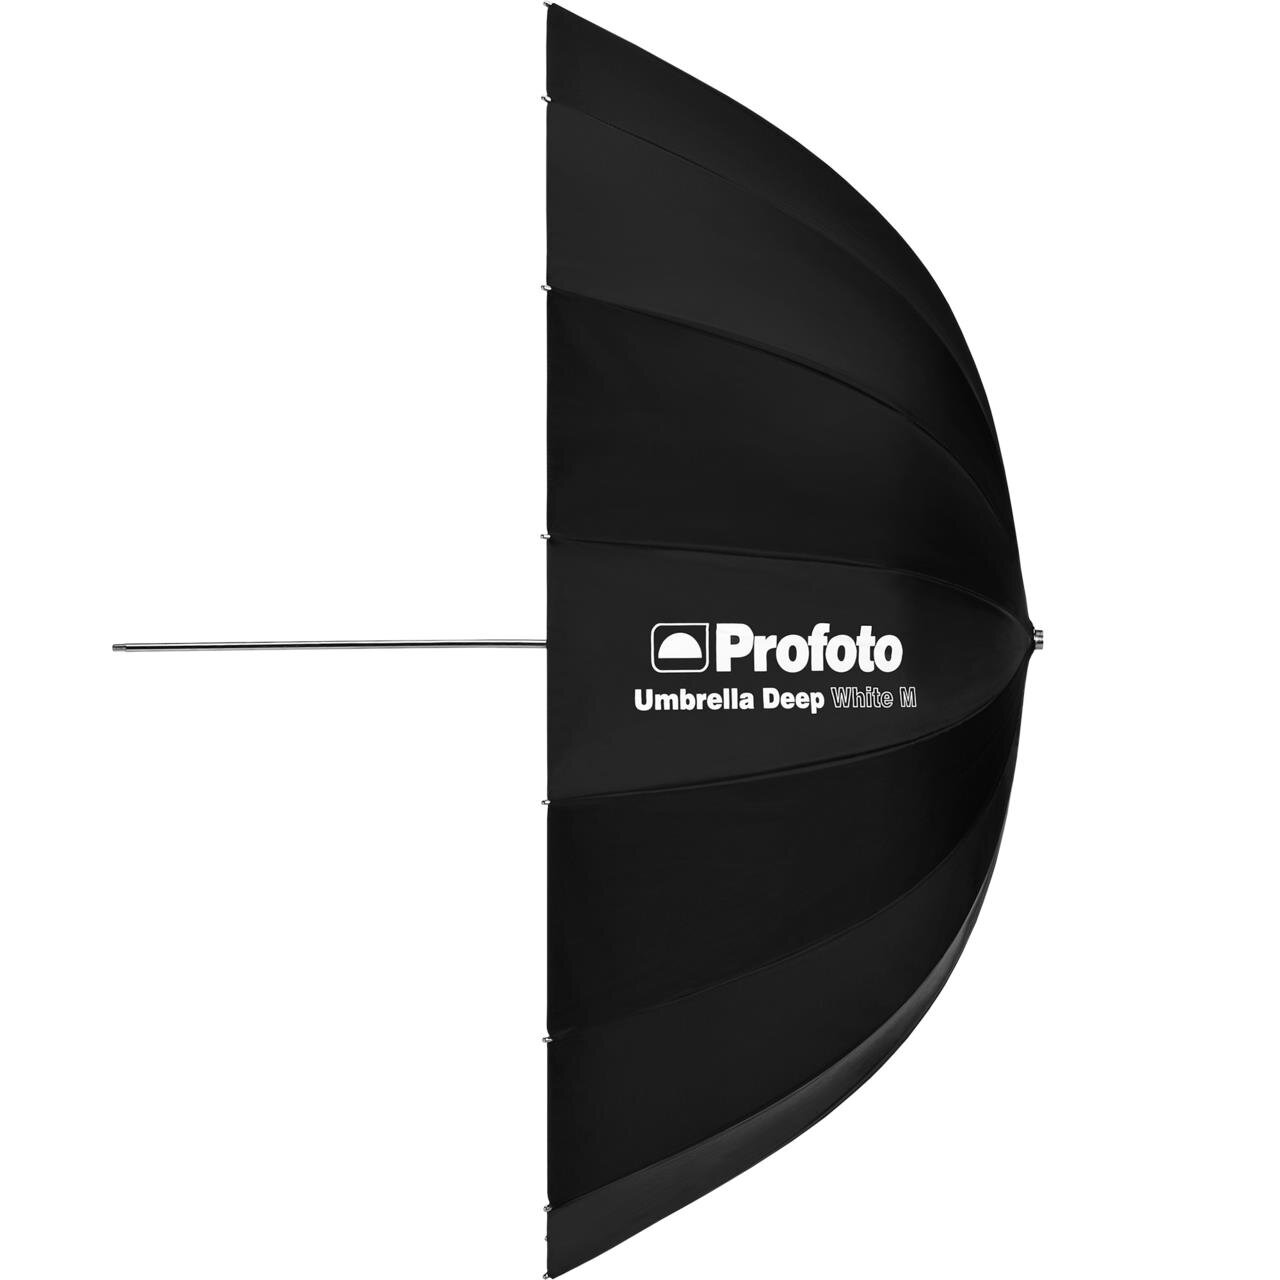 100986_c_Profoto-Umbrella-Deep-White-M-left_ProductImage.png.jpeg